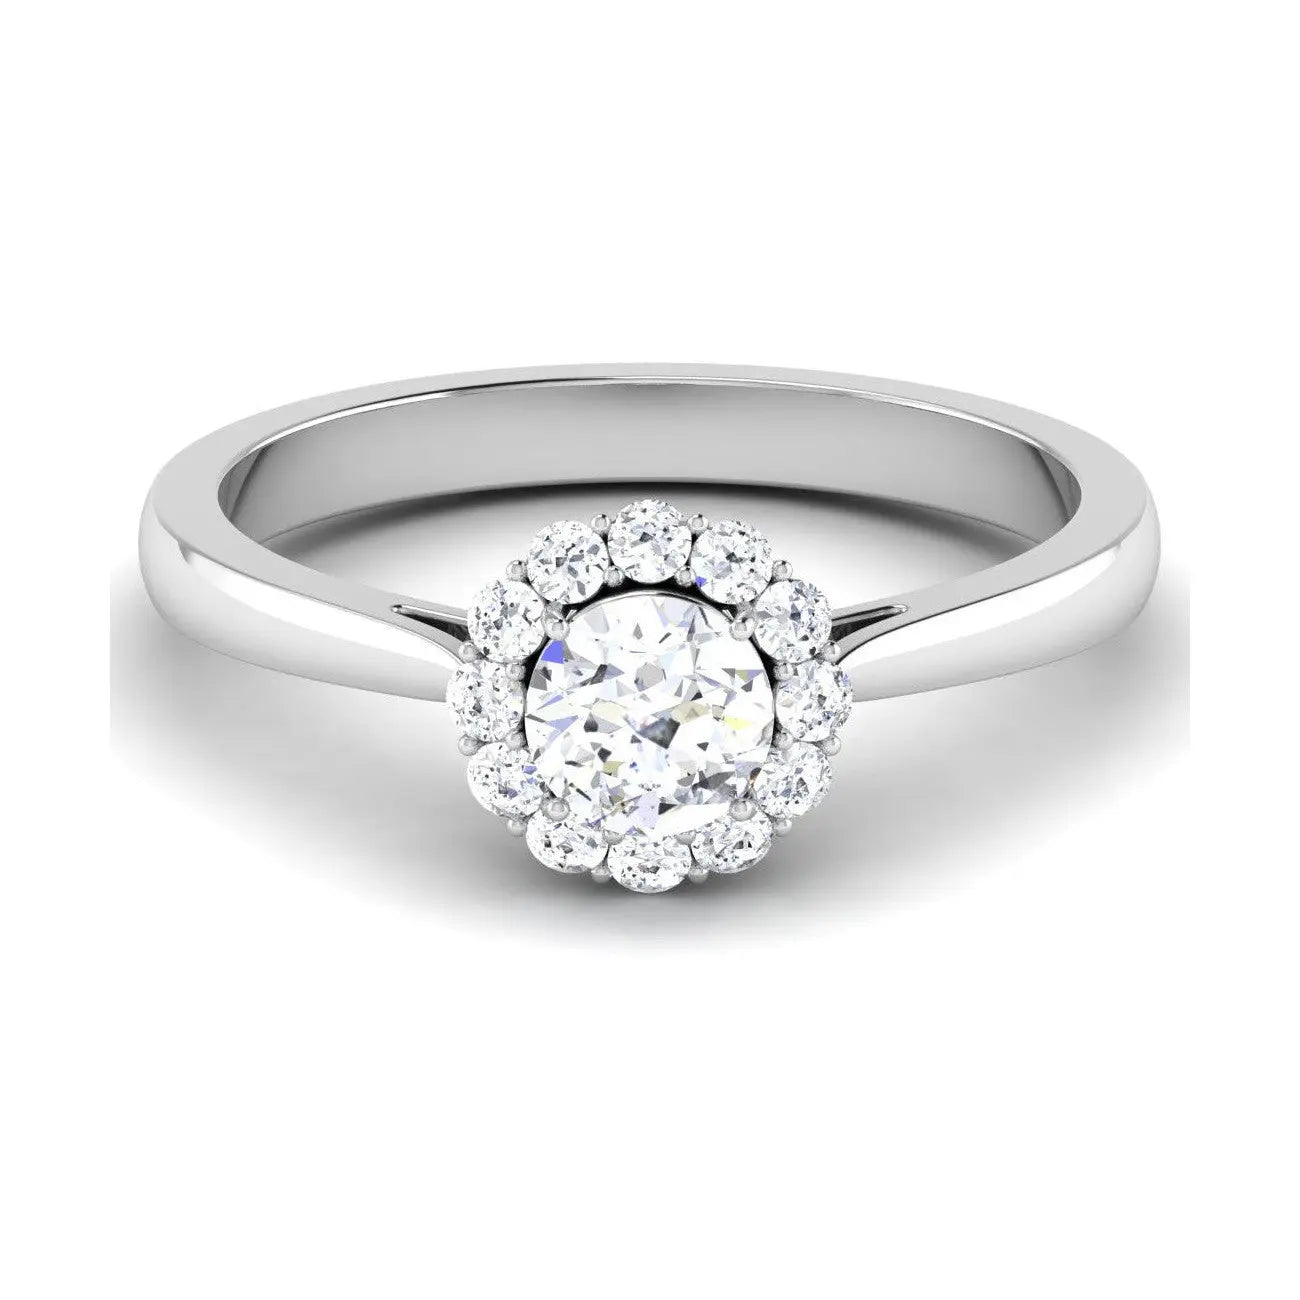 Platinum Solitaire Diamond Engagement Ring with Single Halo JL PT 6998   Jewelove™